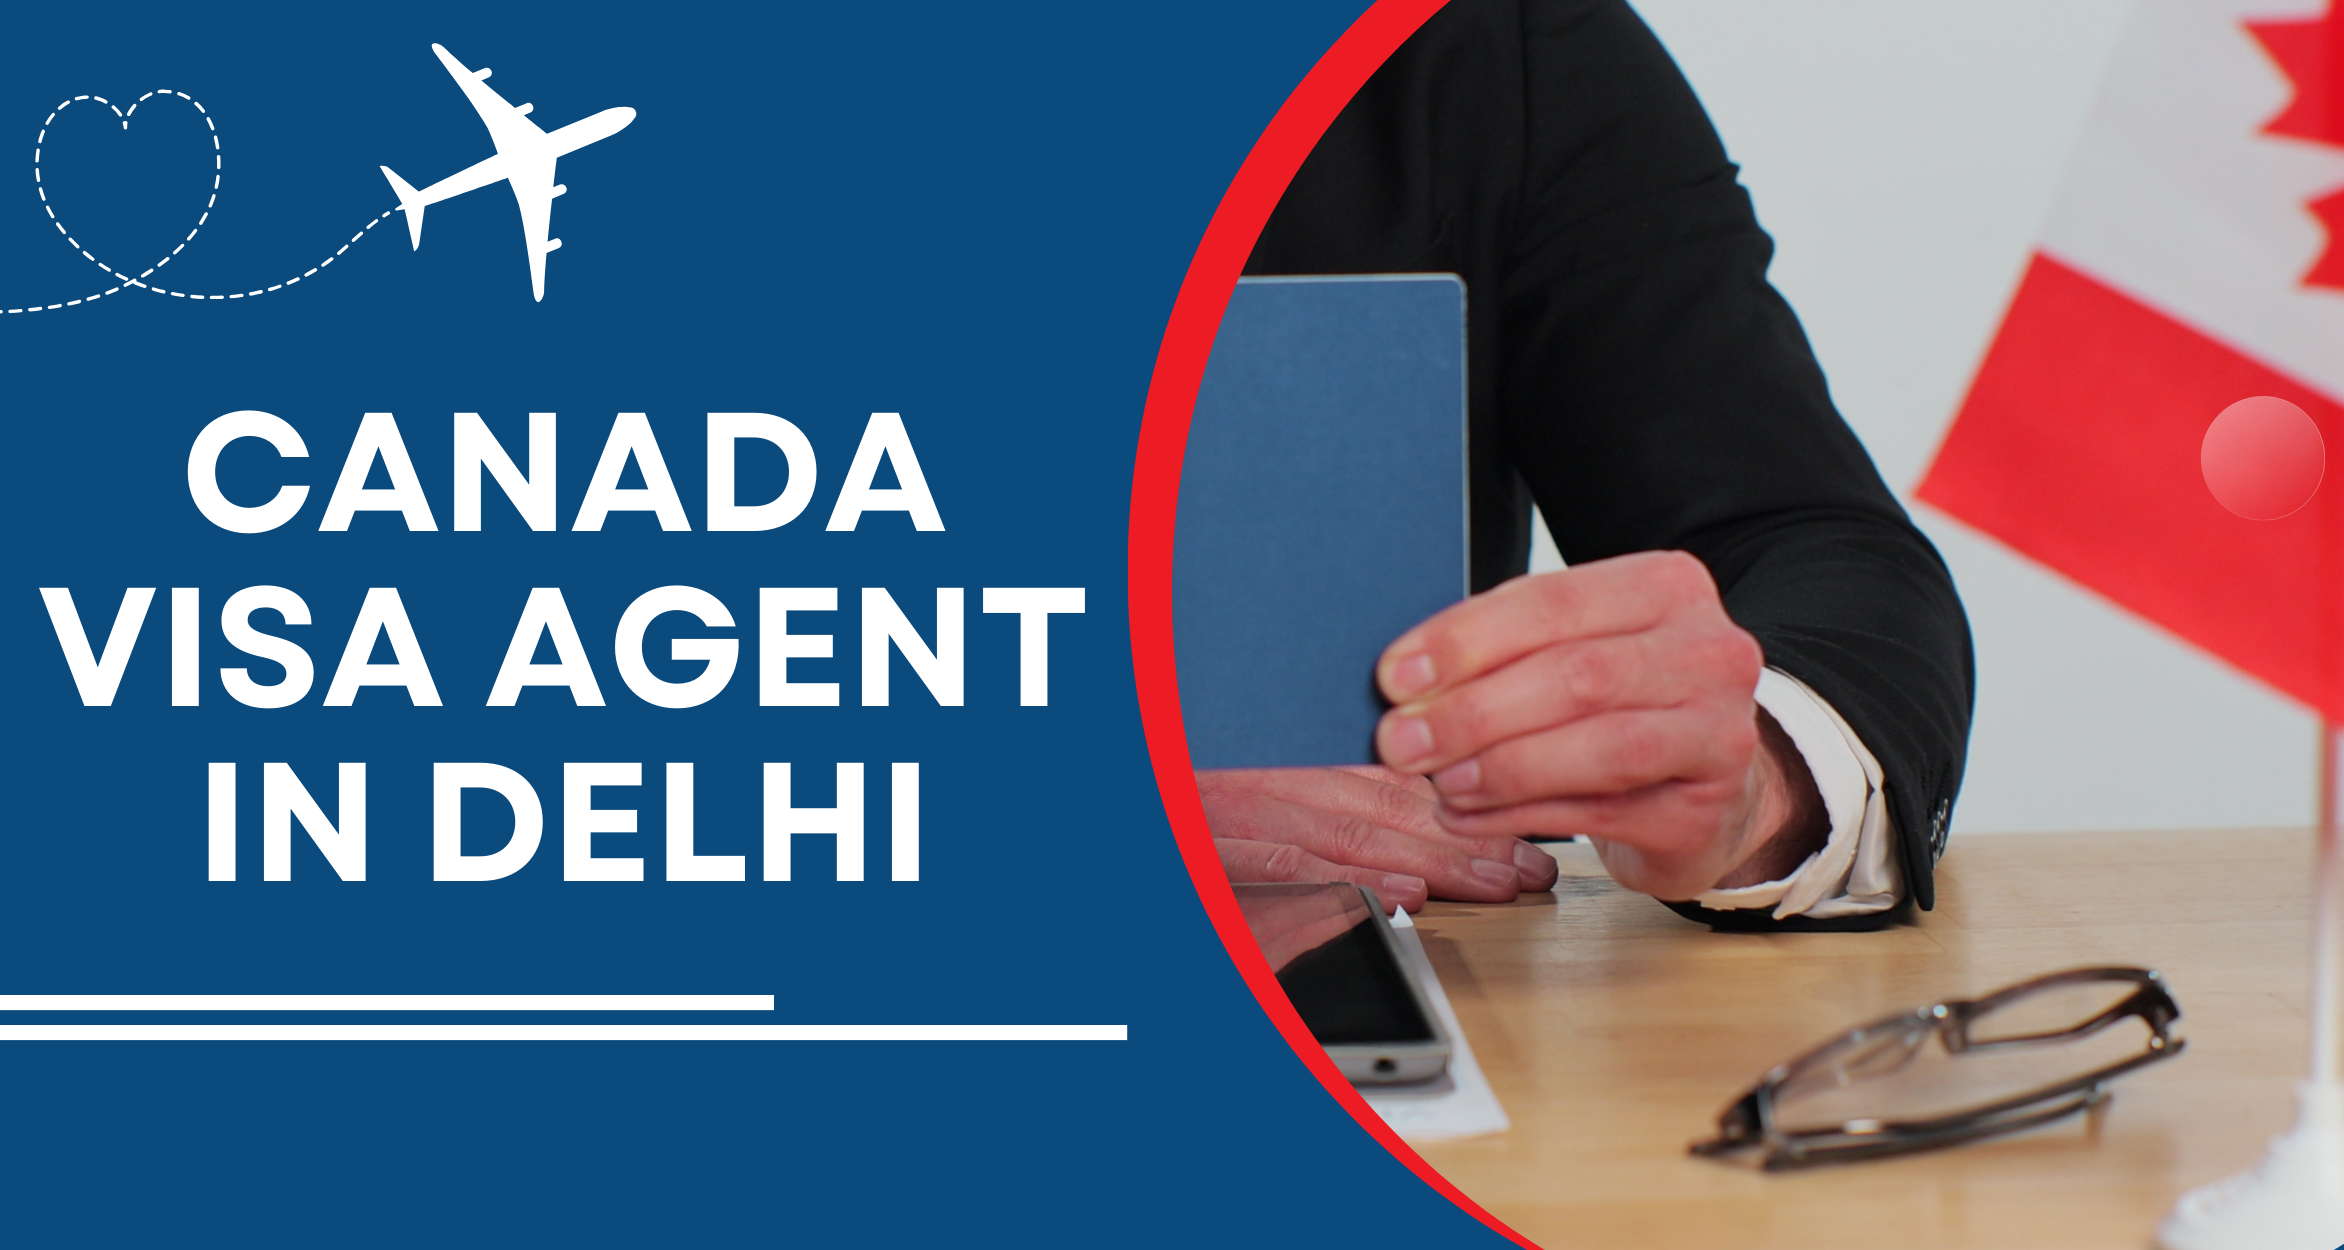 Canada visa agent in Delhi